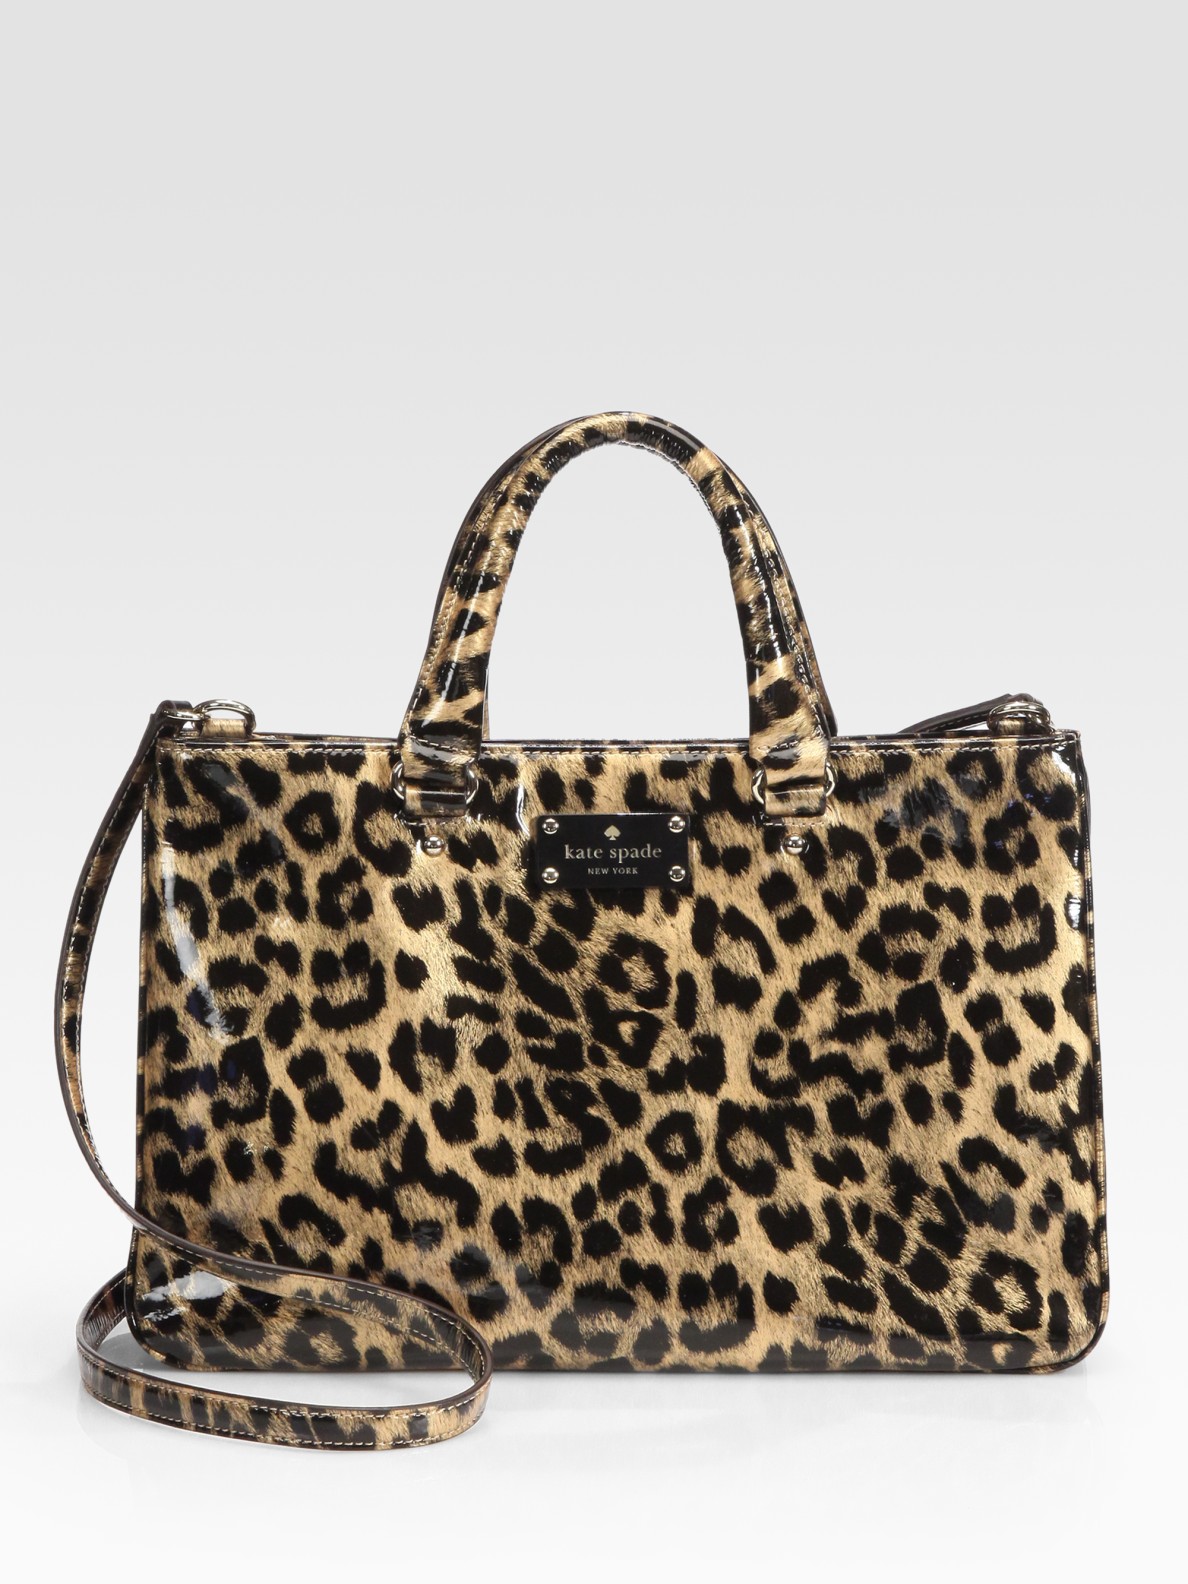 Kate Spade Brette Leopard-print Patent Leather Tote Bag in Beige ...